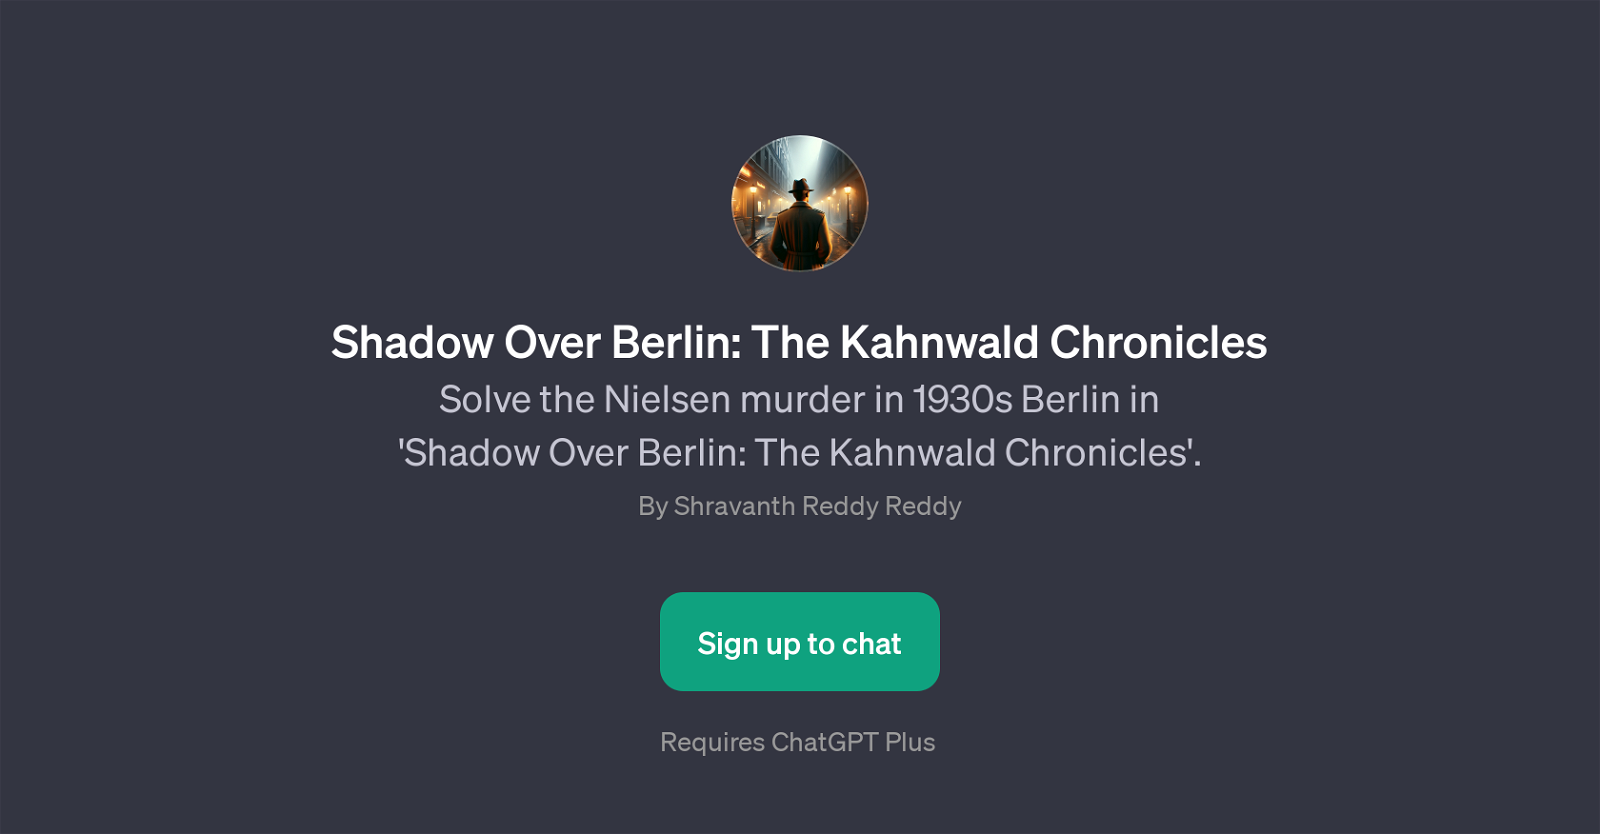 Shadow Over Berlin: The Kahnwald Chronicles website